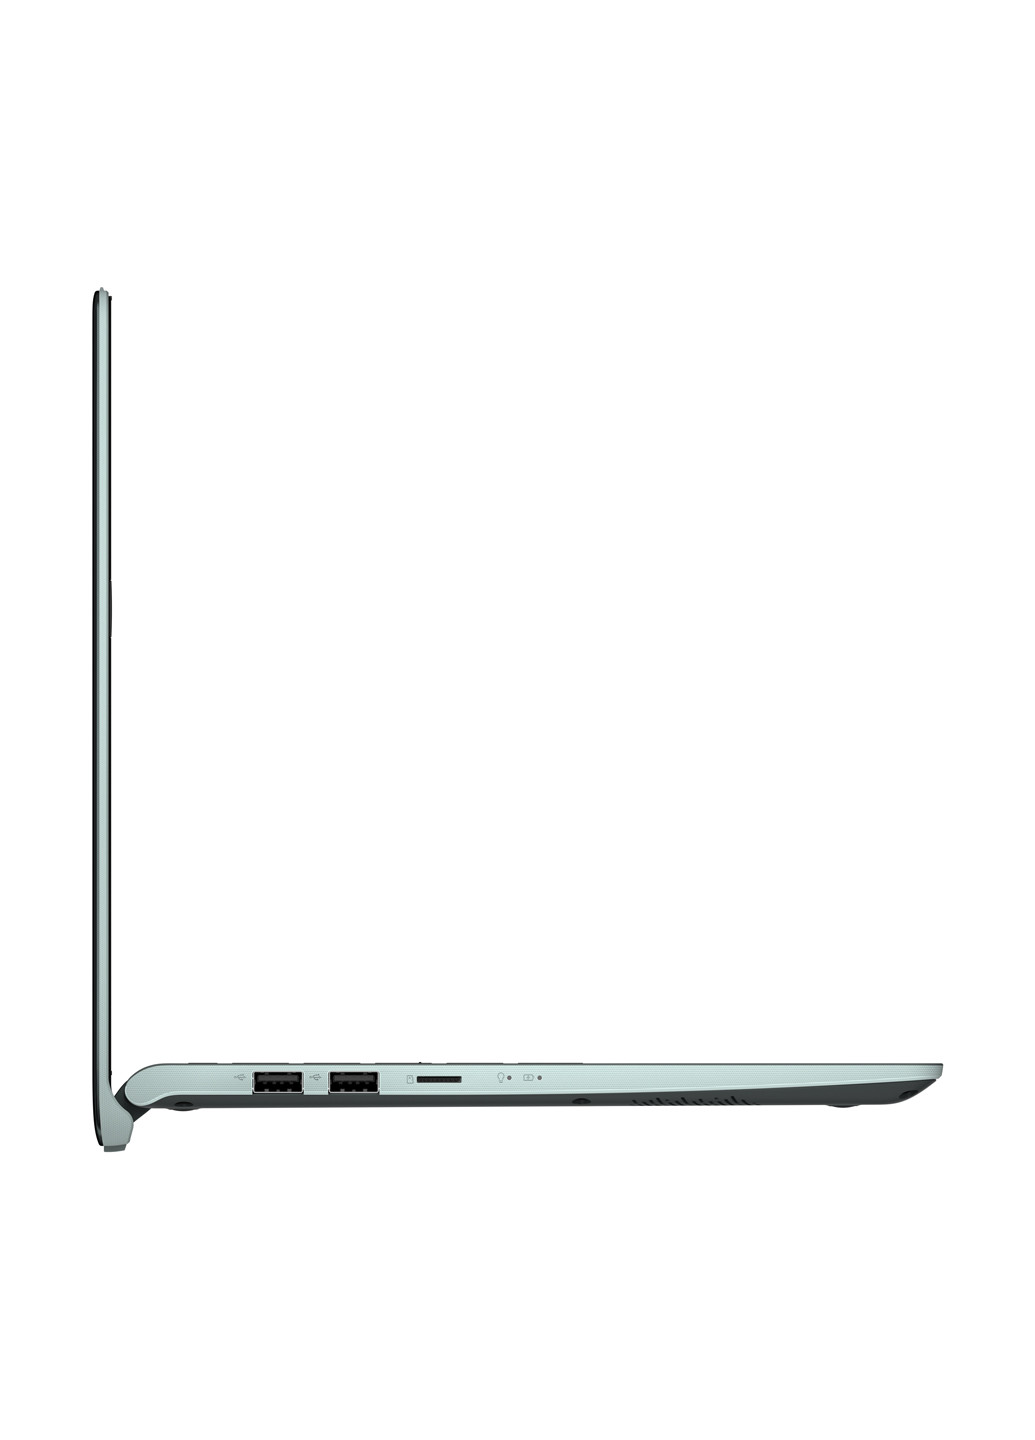 Ноутбук Asus vivobook s14 s430ua-eb179t (90nb0j54-m02250) gun metal (136402519)